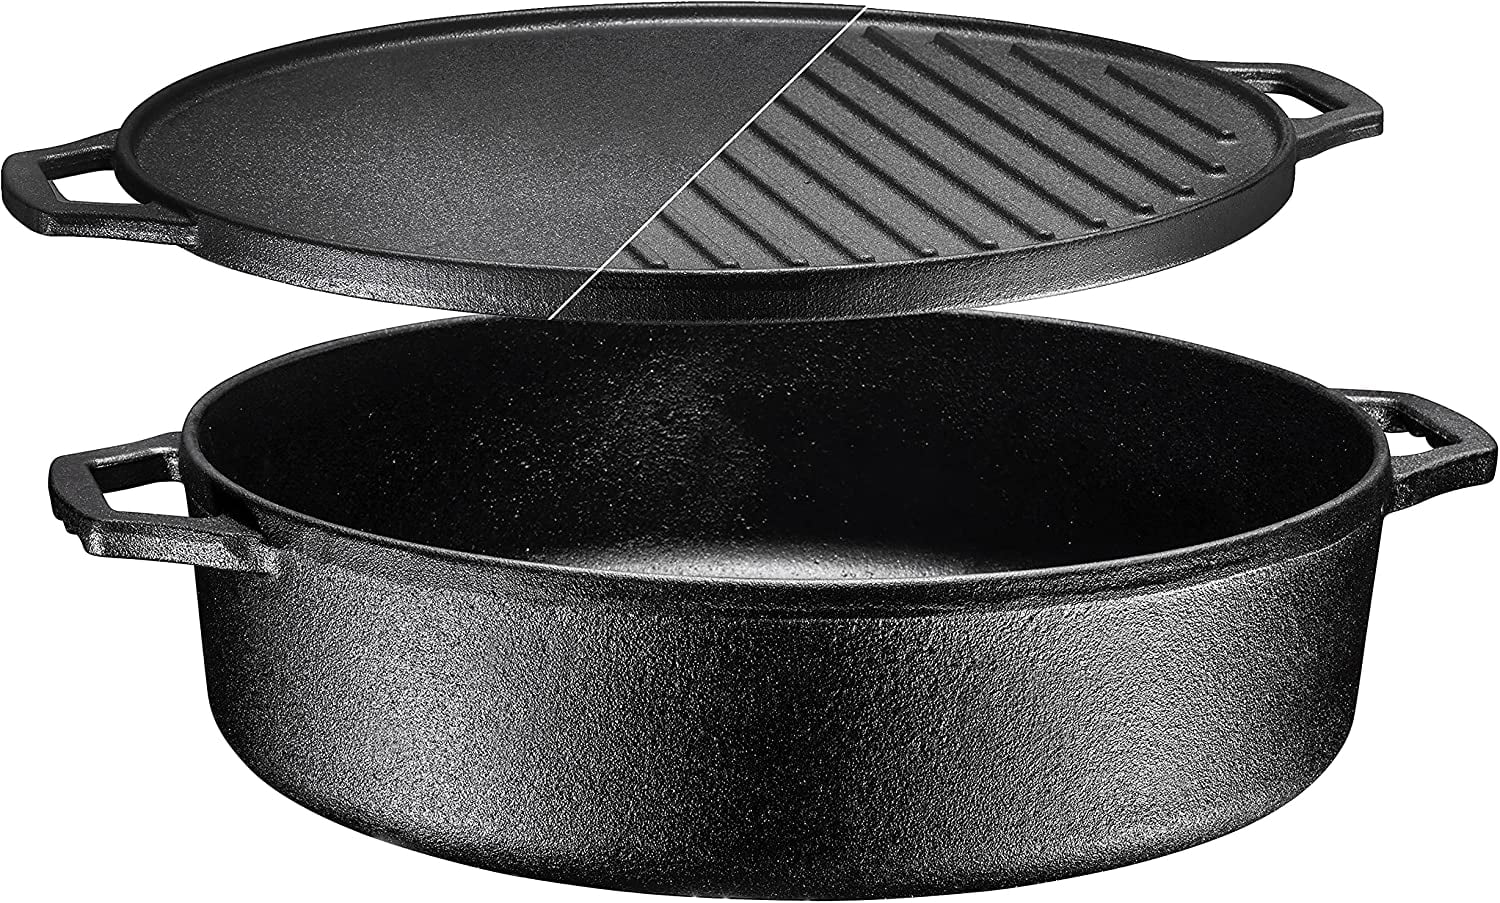 Serax Surface Cast Iron Roasting Pan, 2 Colors, 3 Sizes on Food52